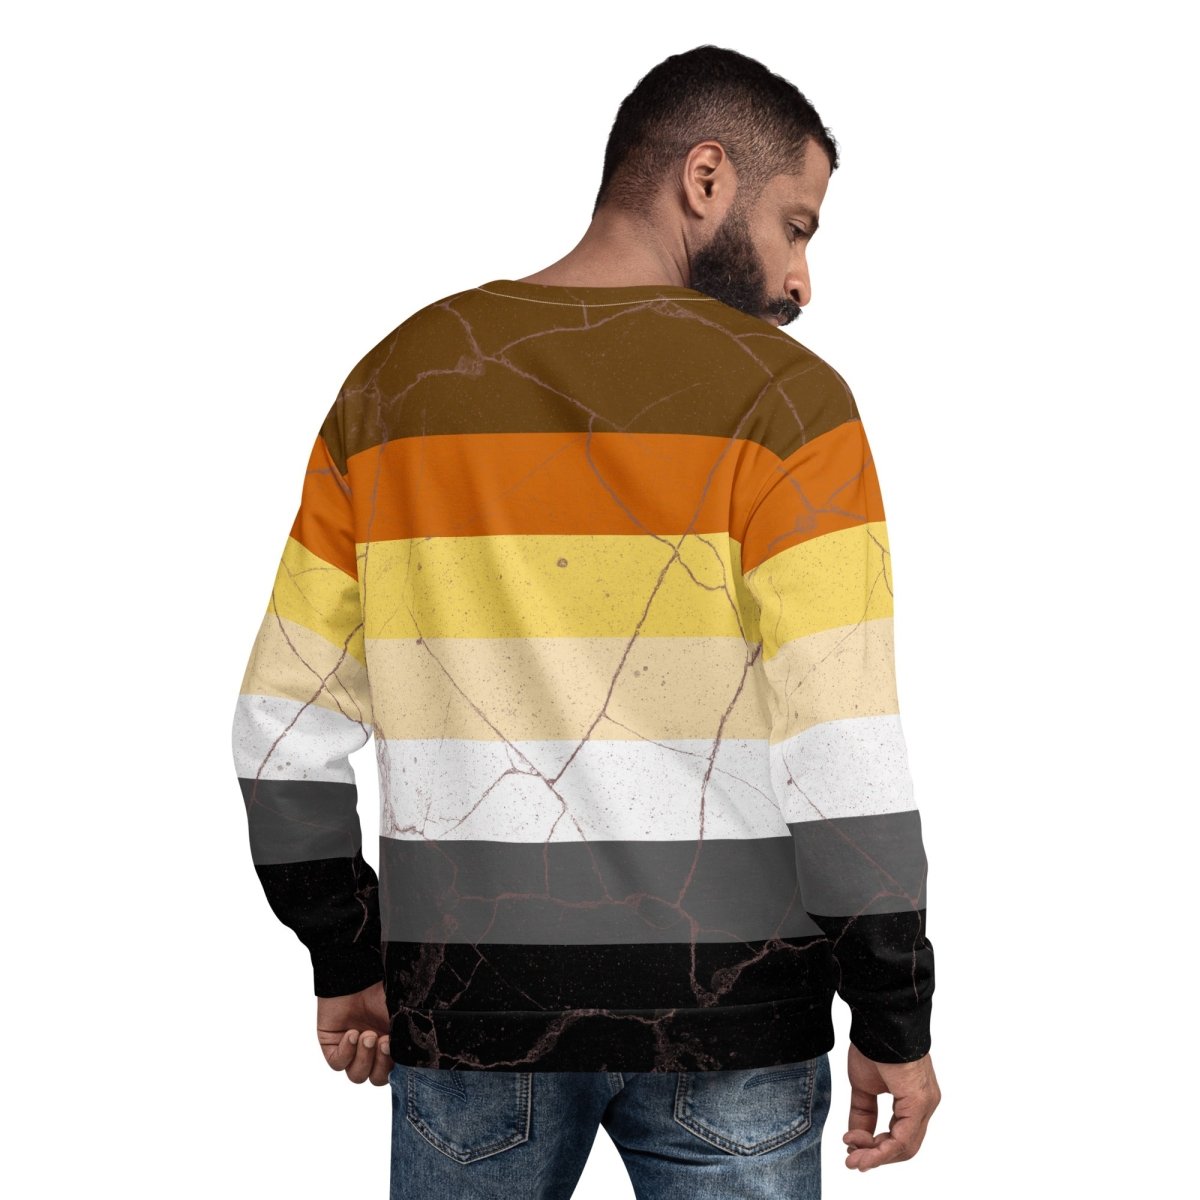 Grunge Bear Pride Flag Sweatshirt - On Trend Shirts